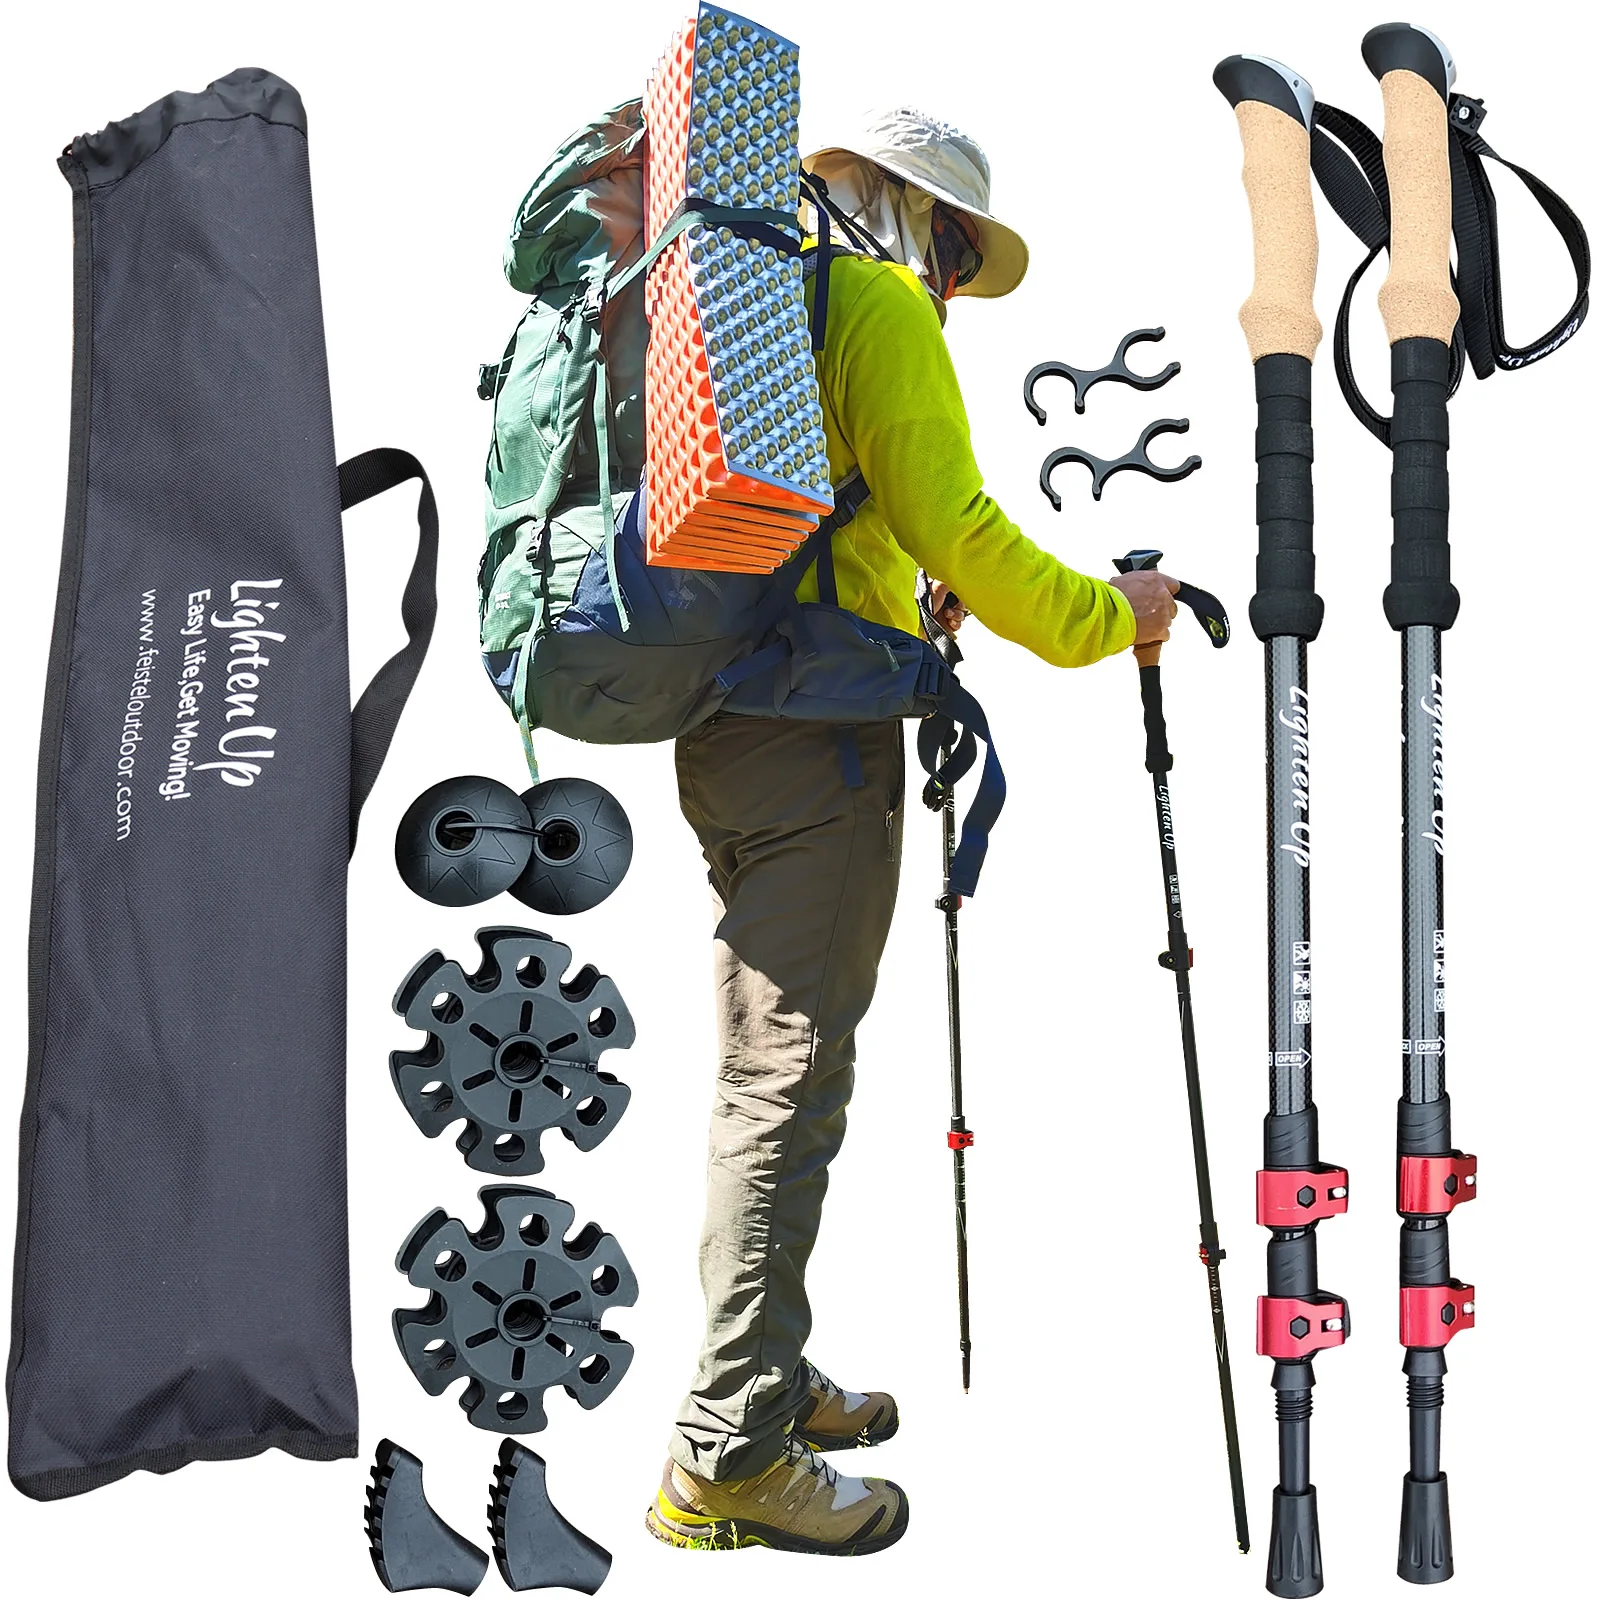 

2PCS Climbing Stick трость Ultralight Trekking Poles Carbon Fiber or Aluminum Walking Stick Collapsible Mountaineering Hiking